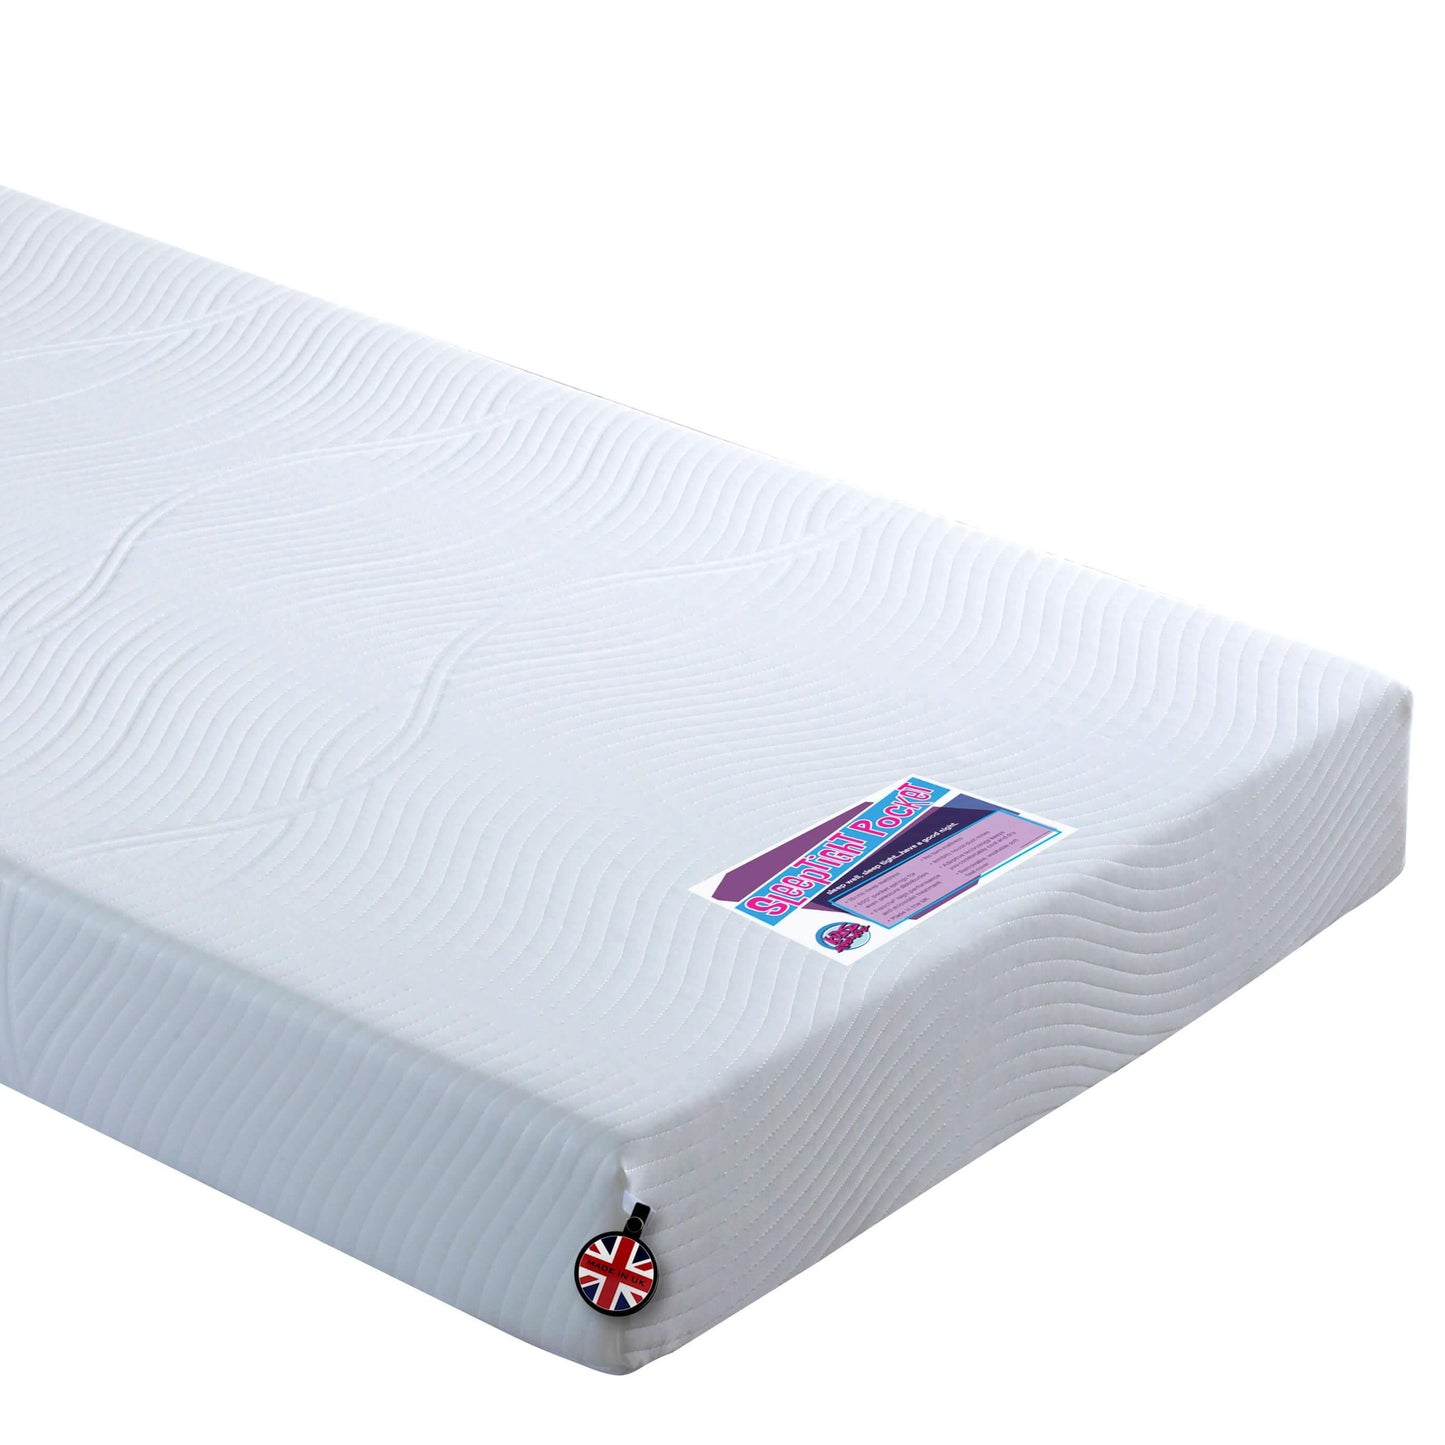 Sleeptight pocket continental small double mattress - full length